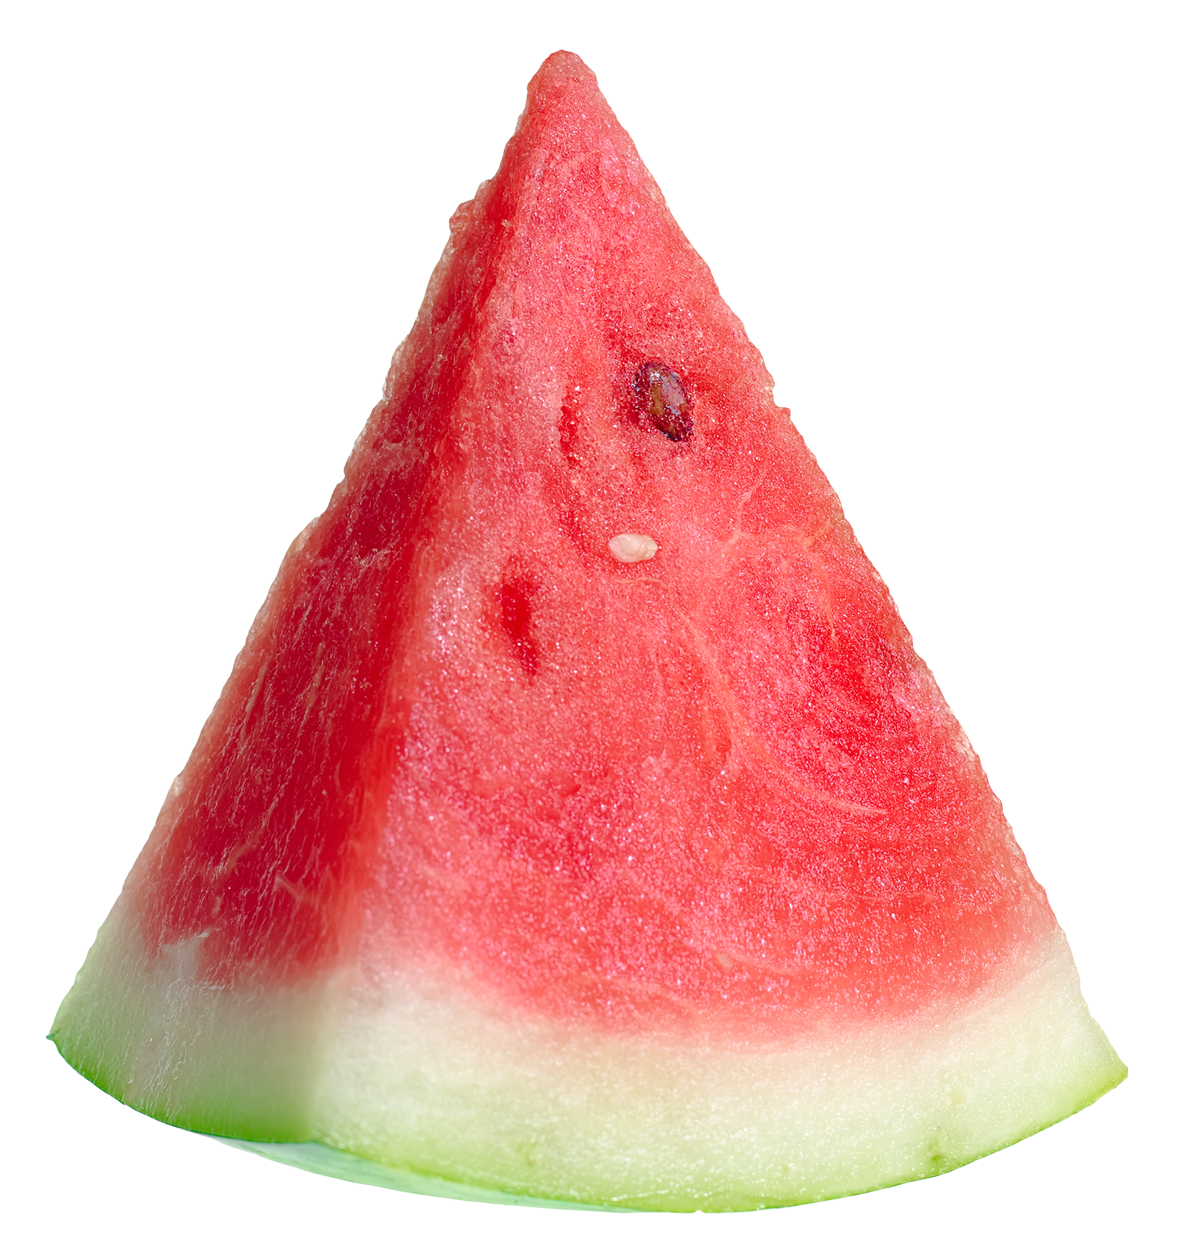 watermelon slice png image pngpix #26511